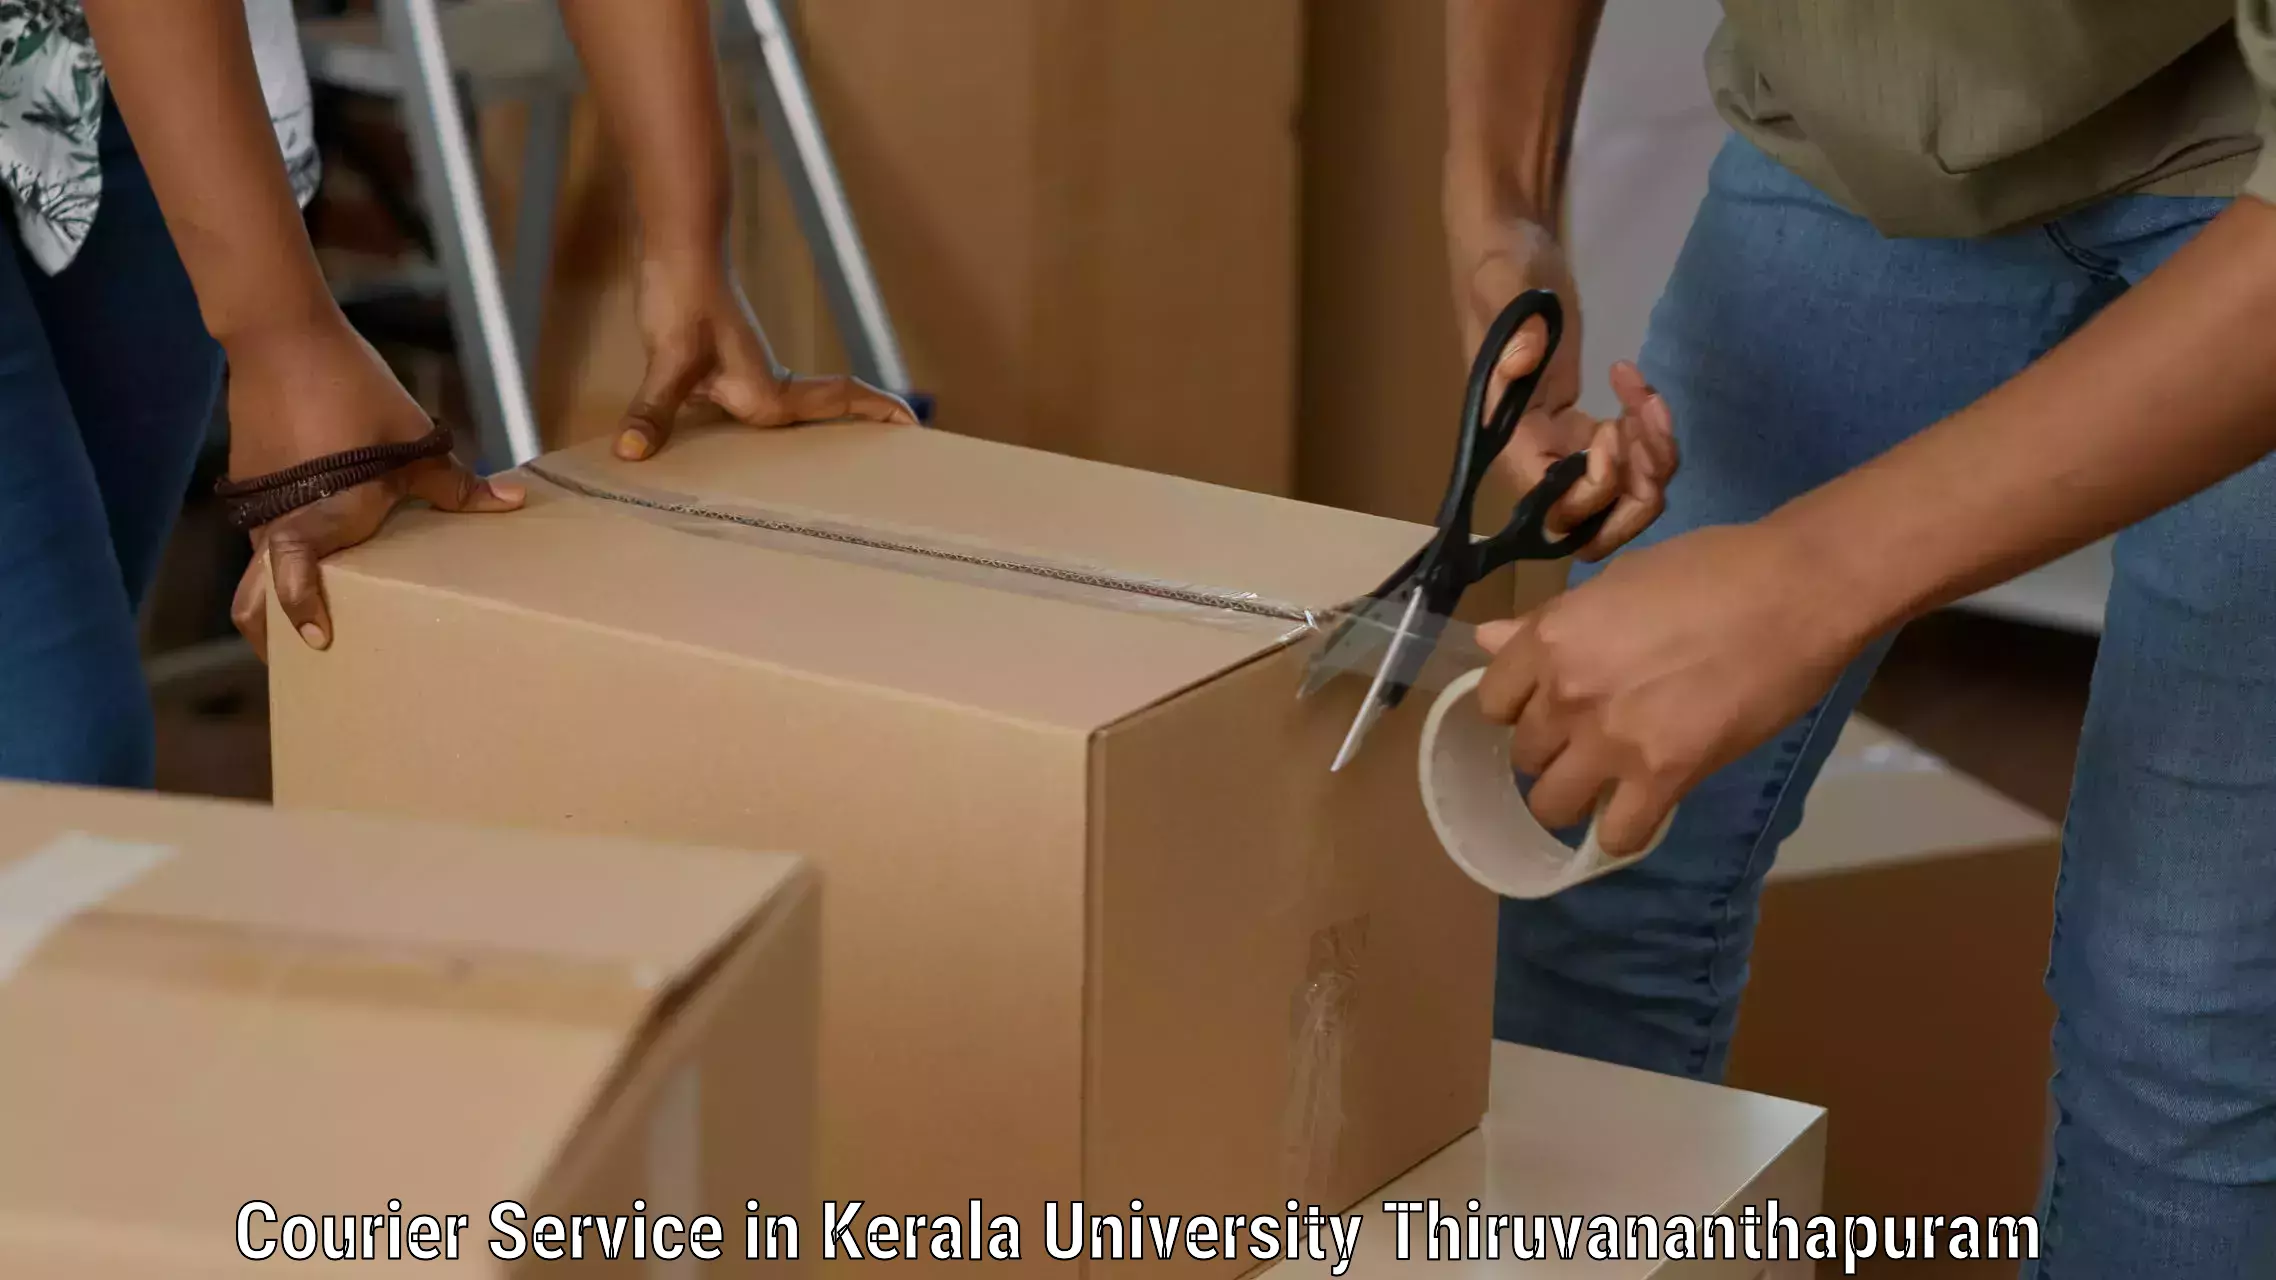 Multi-modal transportation in Kerala University Thiruvananthapuram